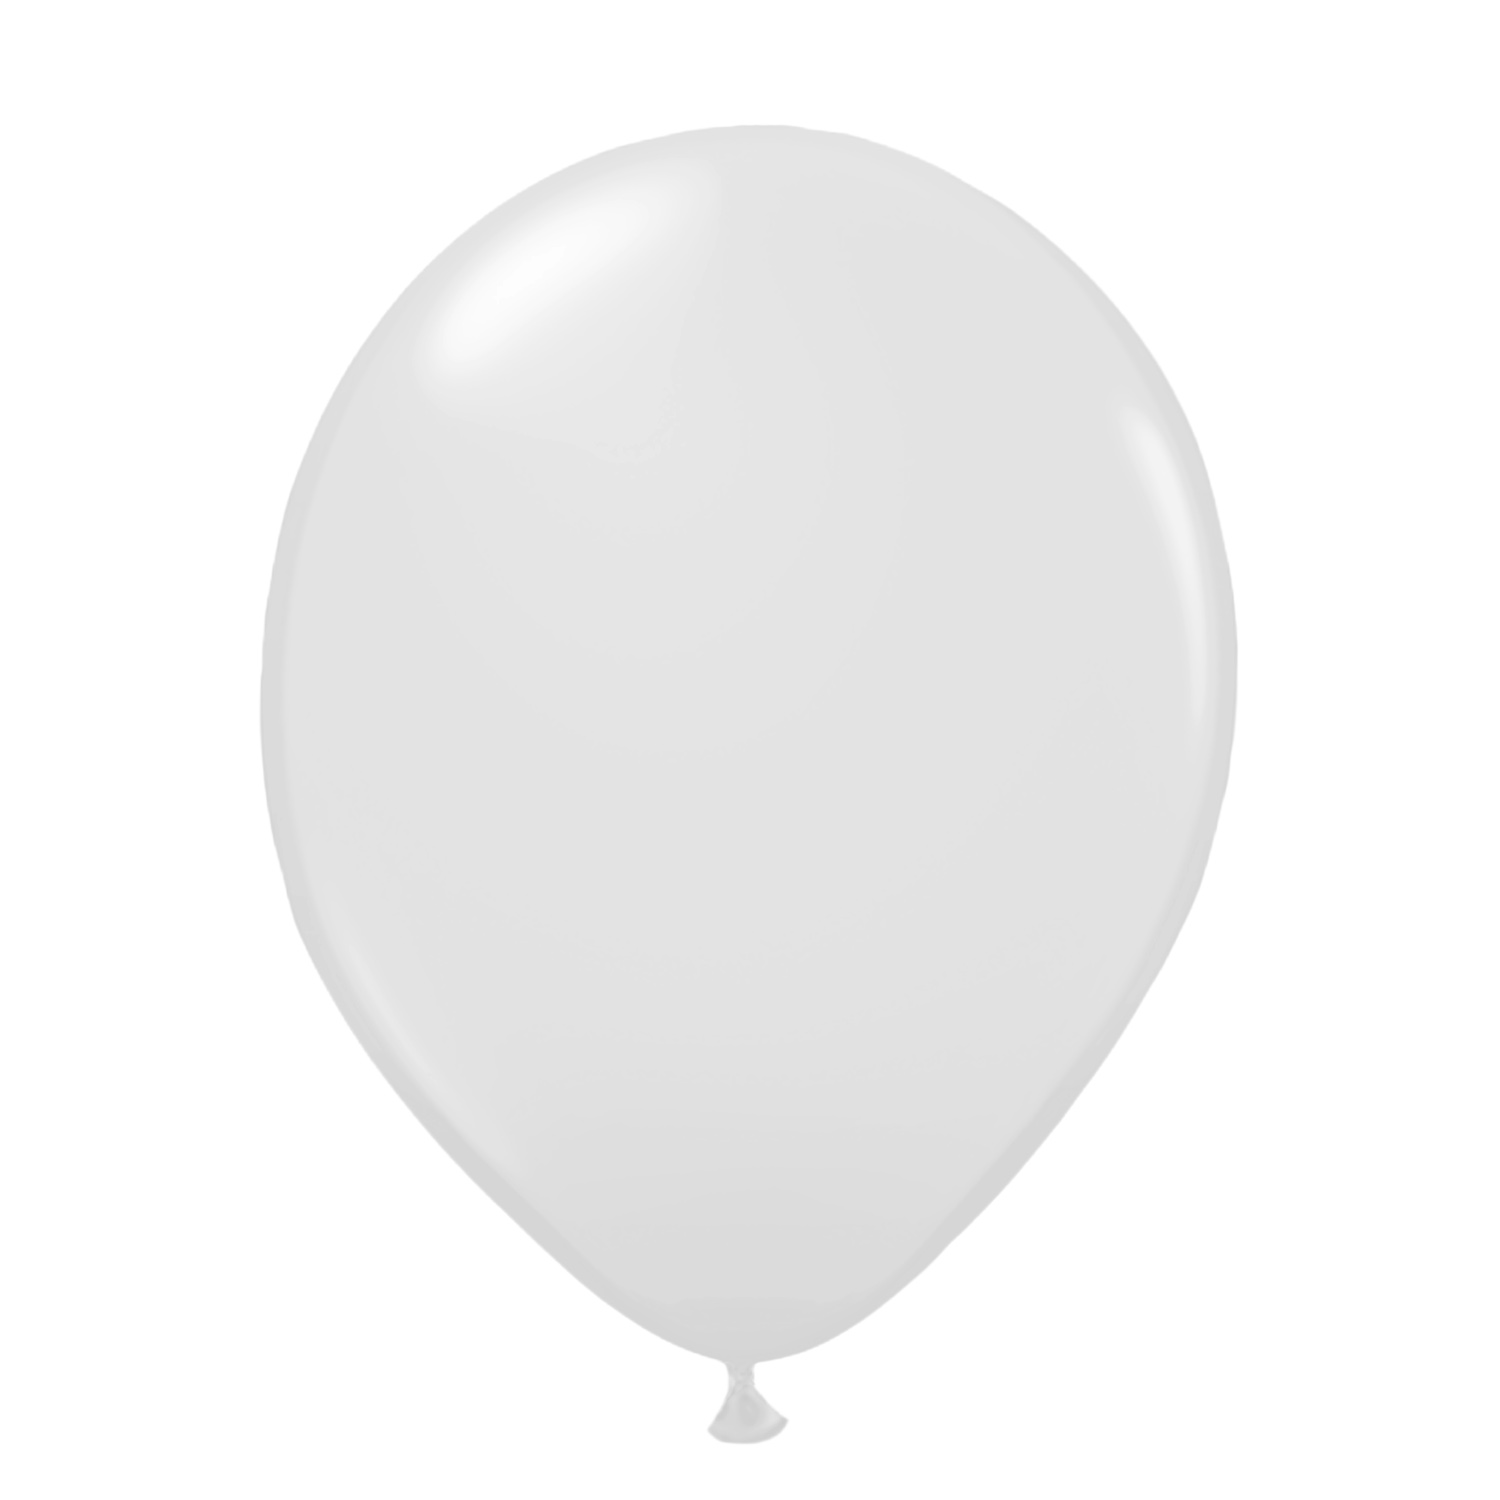 25er SET - Latex Luftballon - 12inch - Weiß